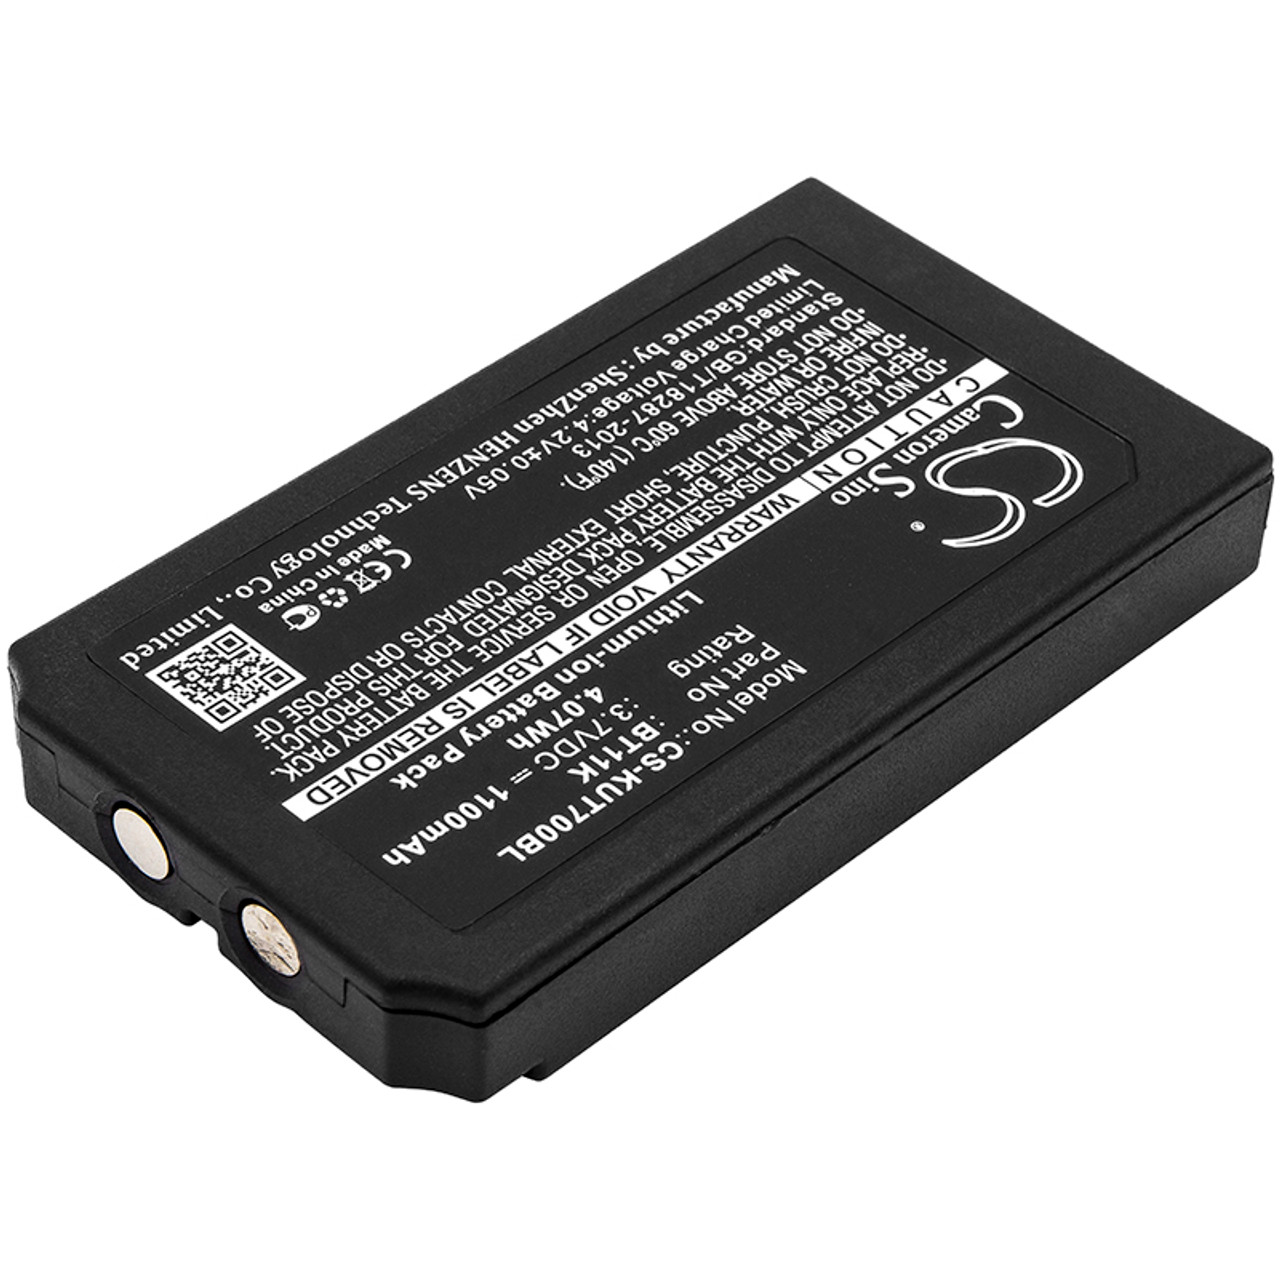 Konecranes Minim Joystick Radio RMJ Battery for Crane Remote Control